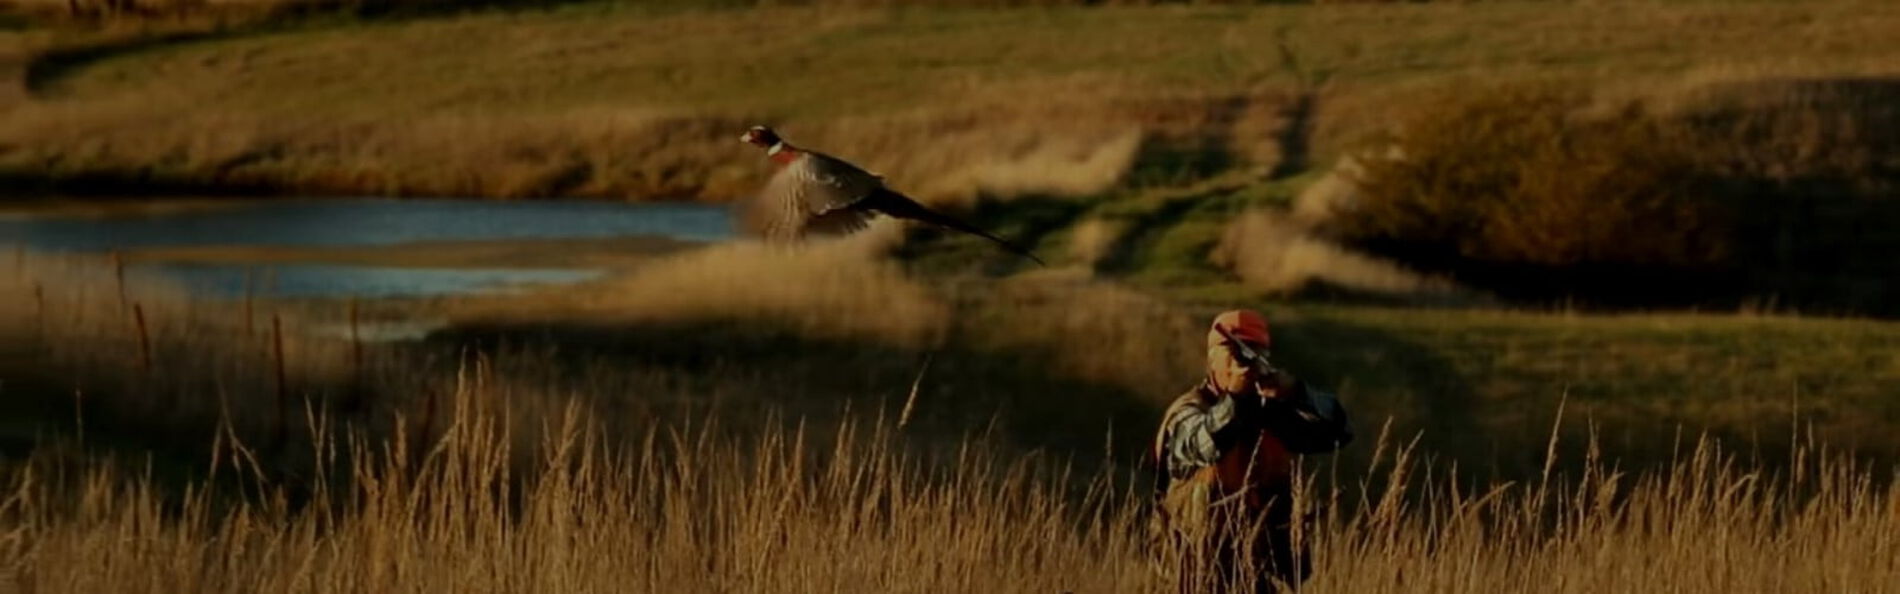 hunter aiming shotgun at flying pheasant